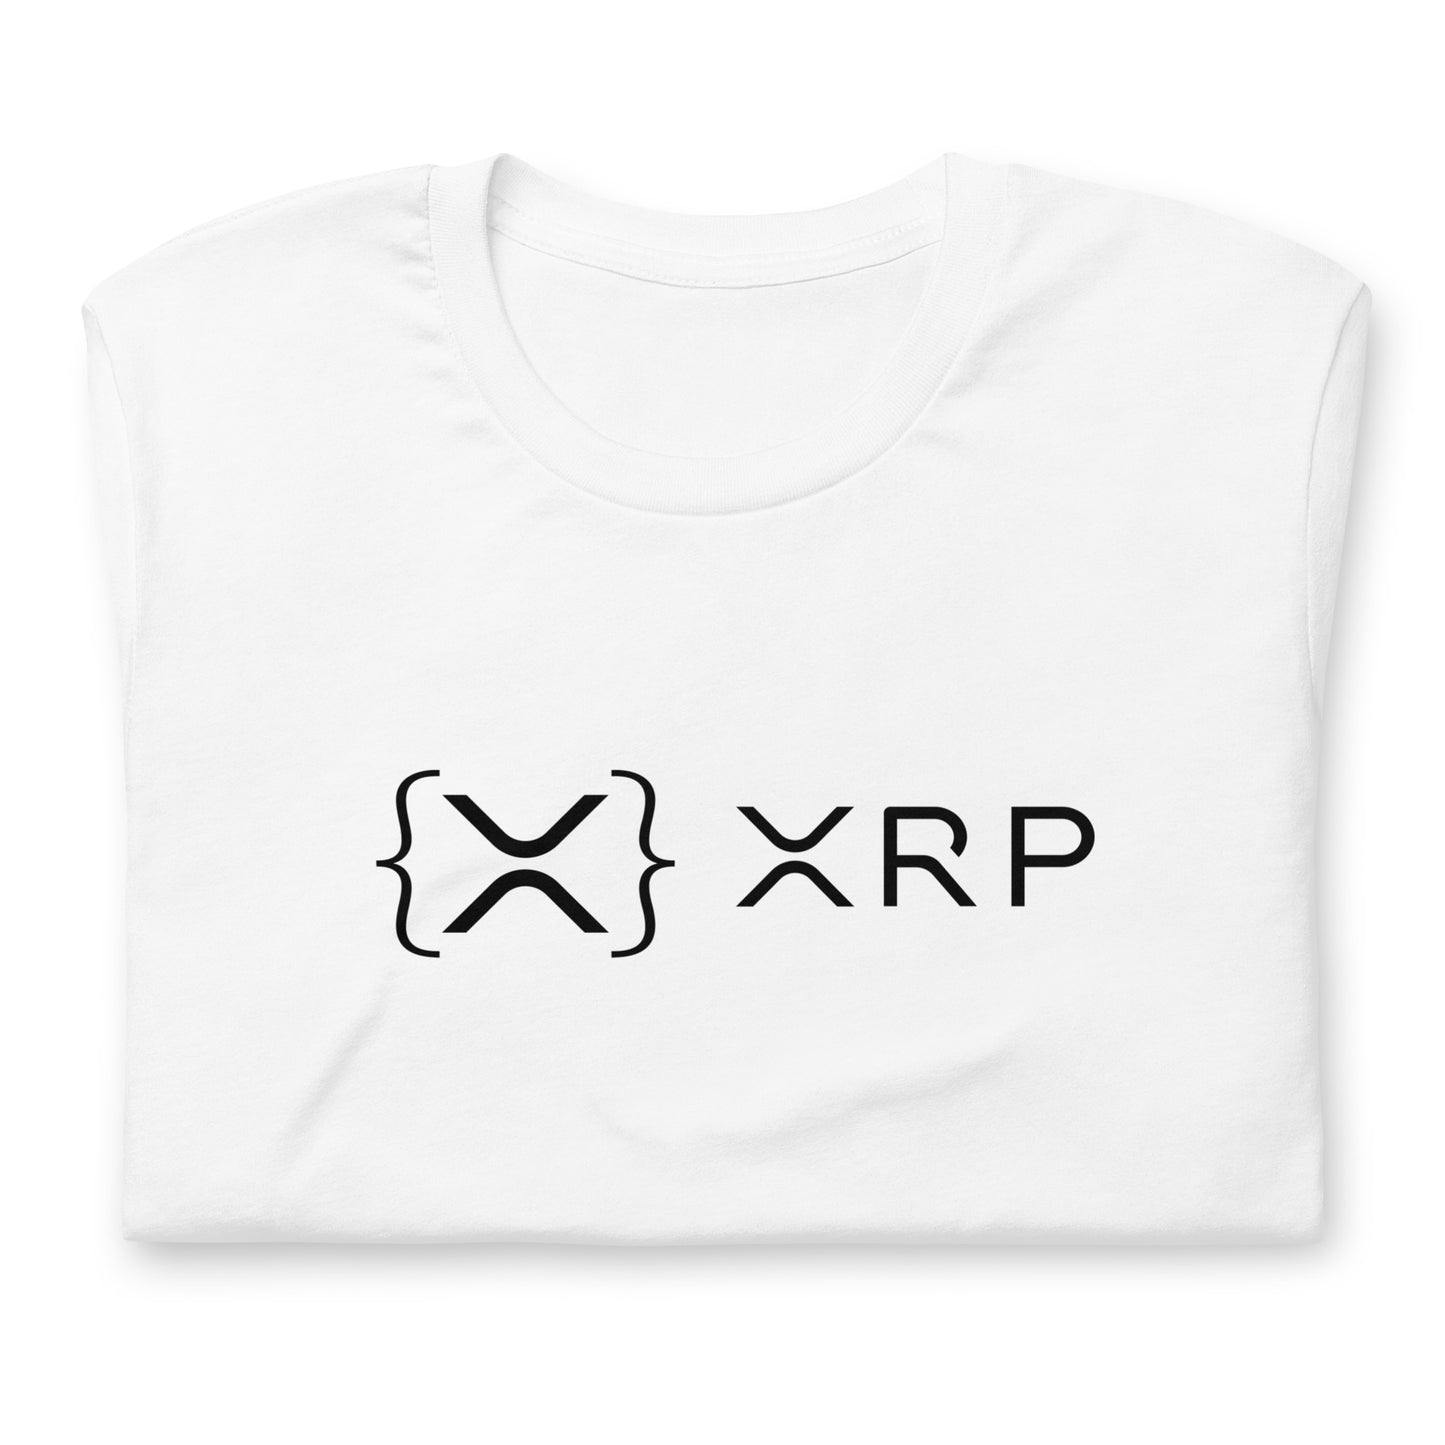 Xrp Bracket Code T-Shirt